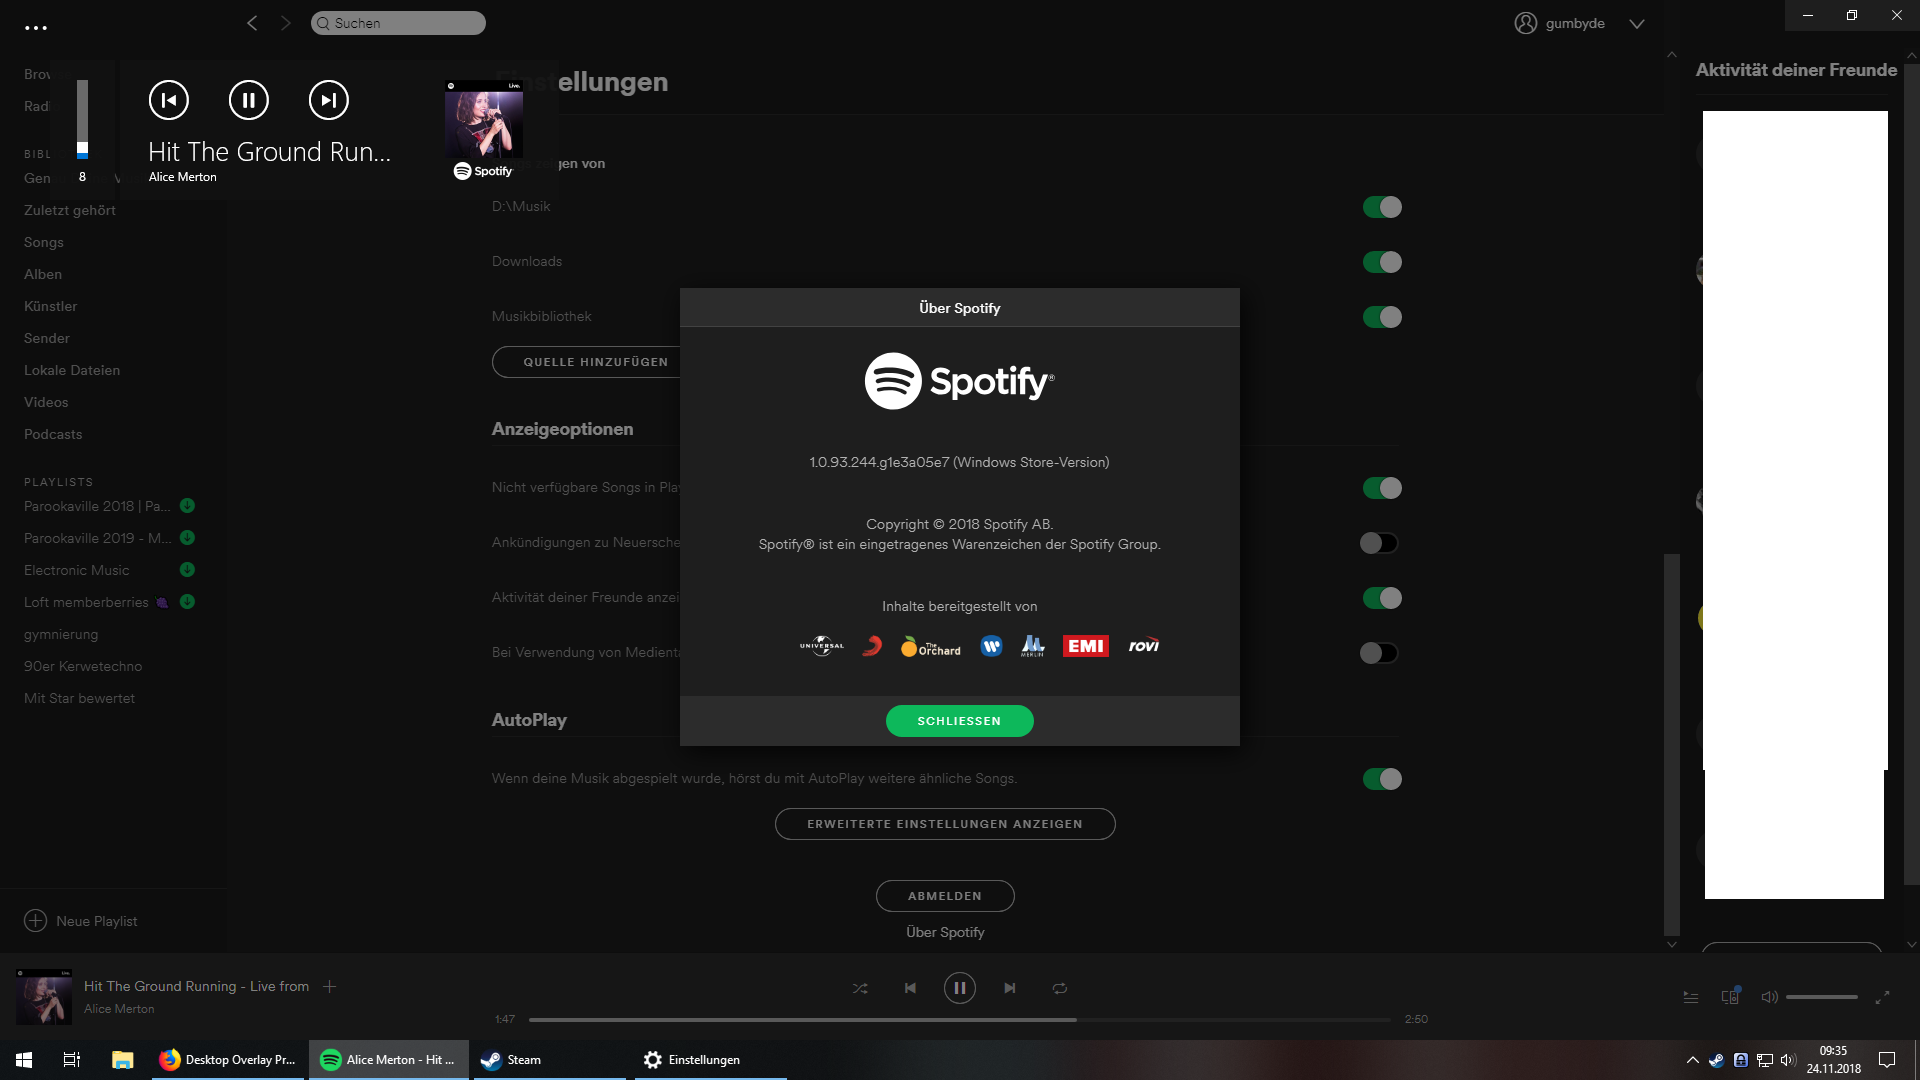 Spotify stream overlay